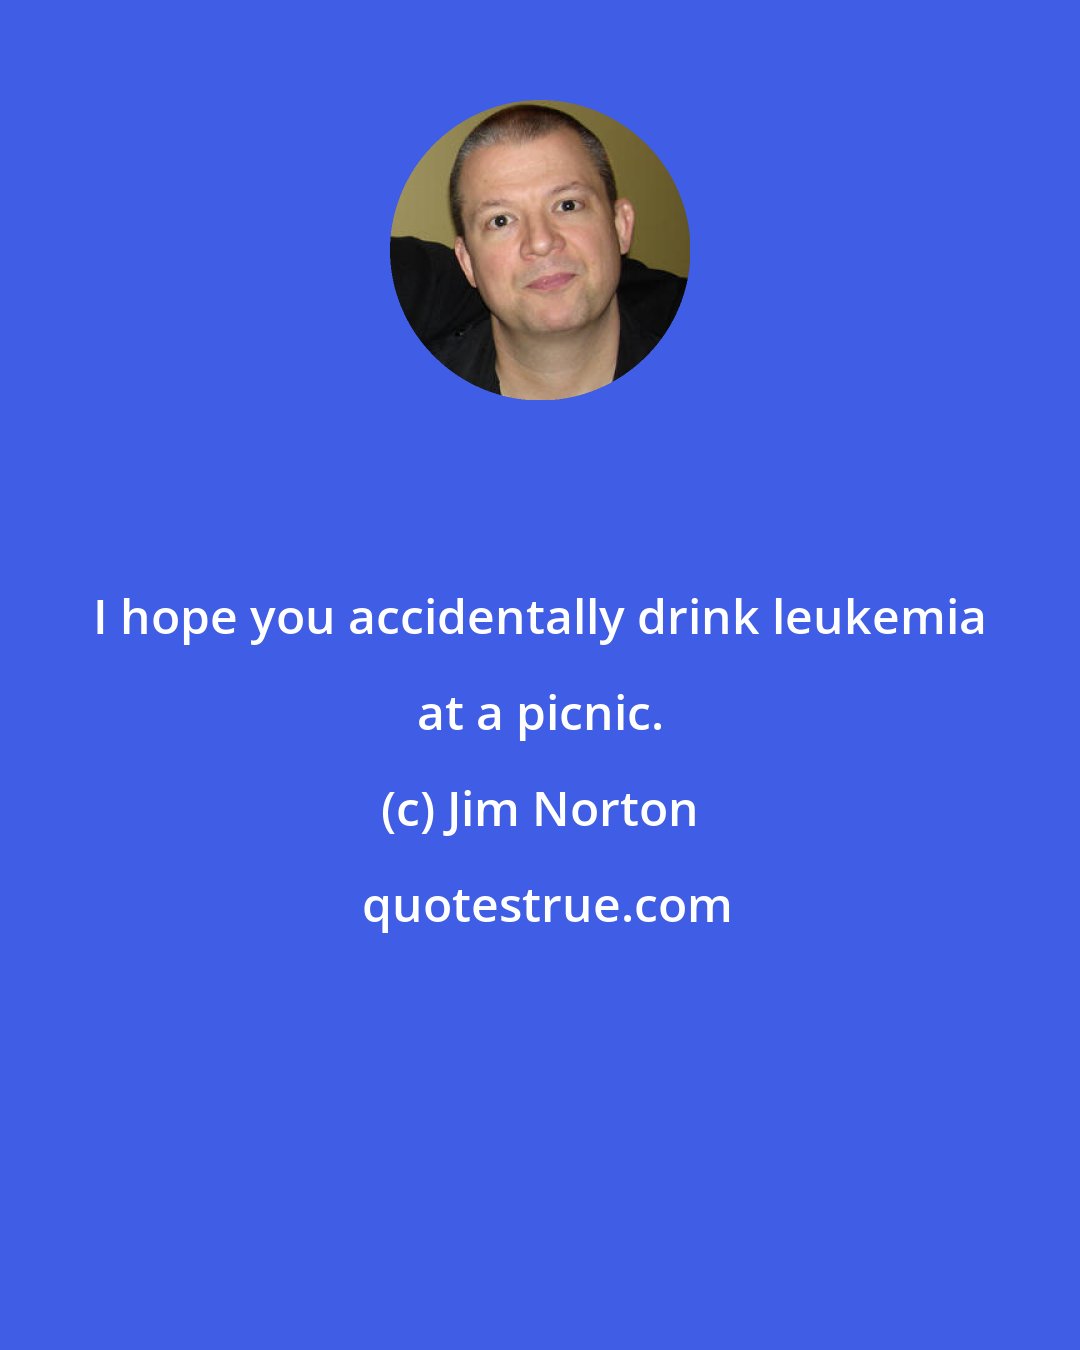 Jim Norton: I hope you accidentally drink leukemia at a picnic.